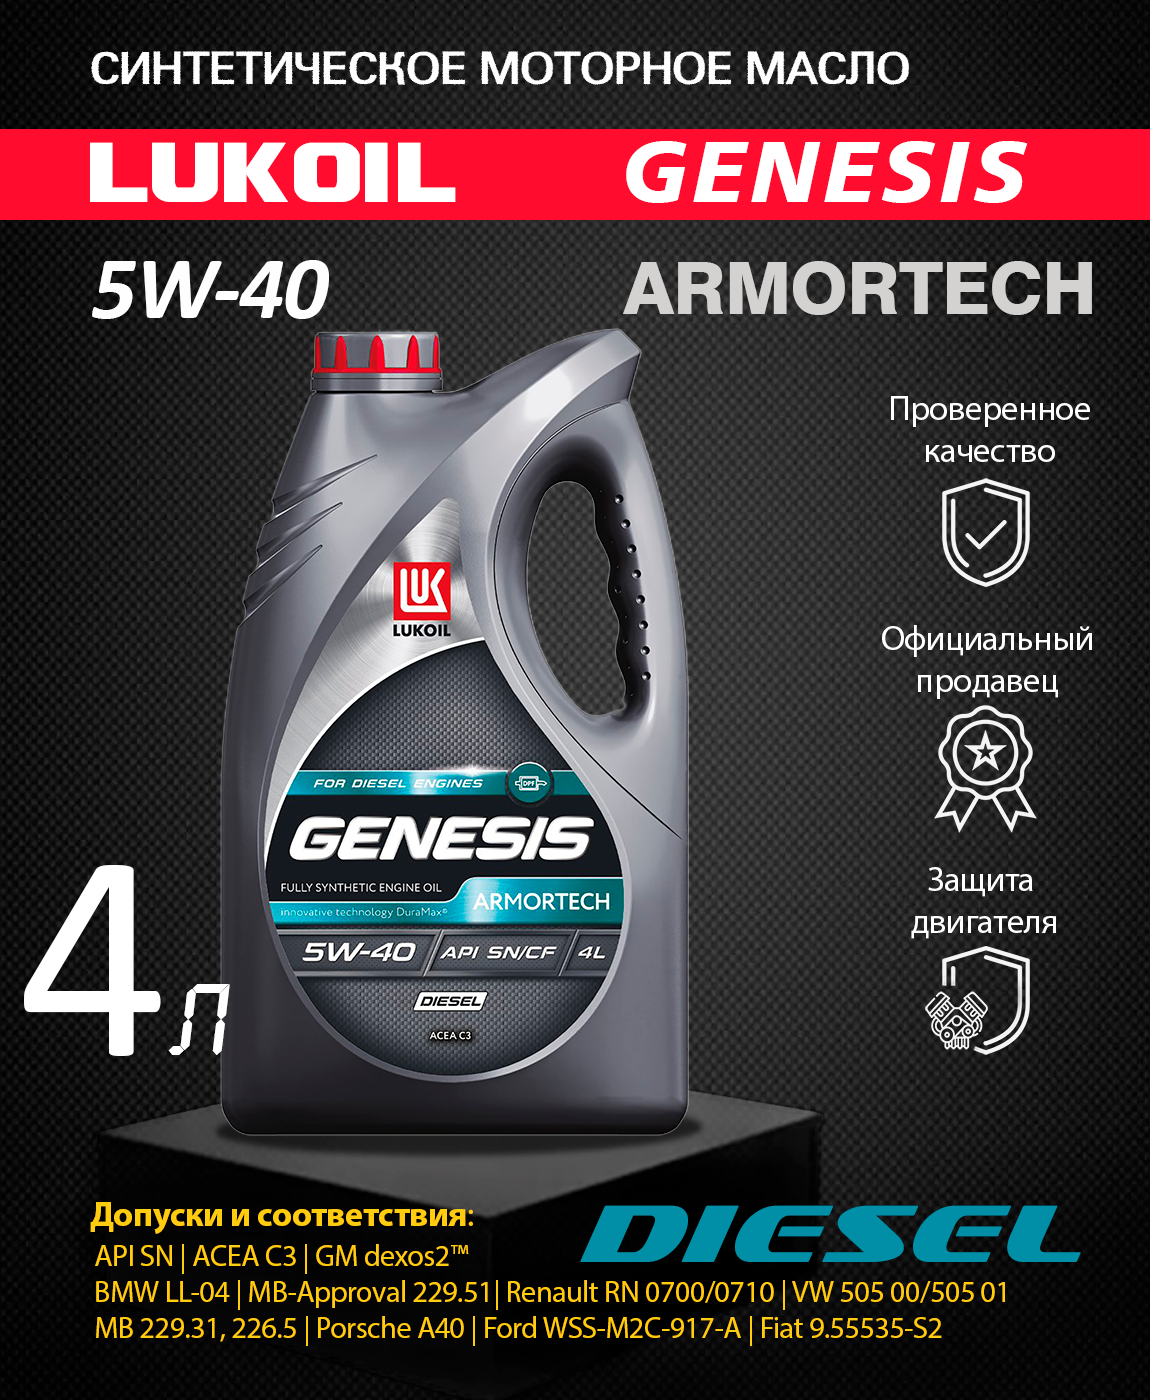 Lukoil genesis 5w40 4л. Лукойл Генезис 5w30 дизель. Масло Лукойл Genesis Armortech Diesel 5w-30 4 л. Моторное масло Lukoil Genesis Armortech 5w-40, 4л. Lukoil Genesis Armortech dexos2.